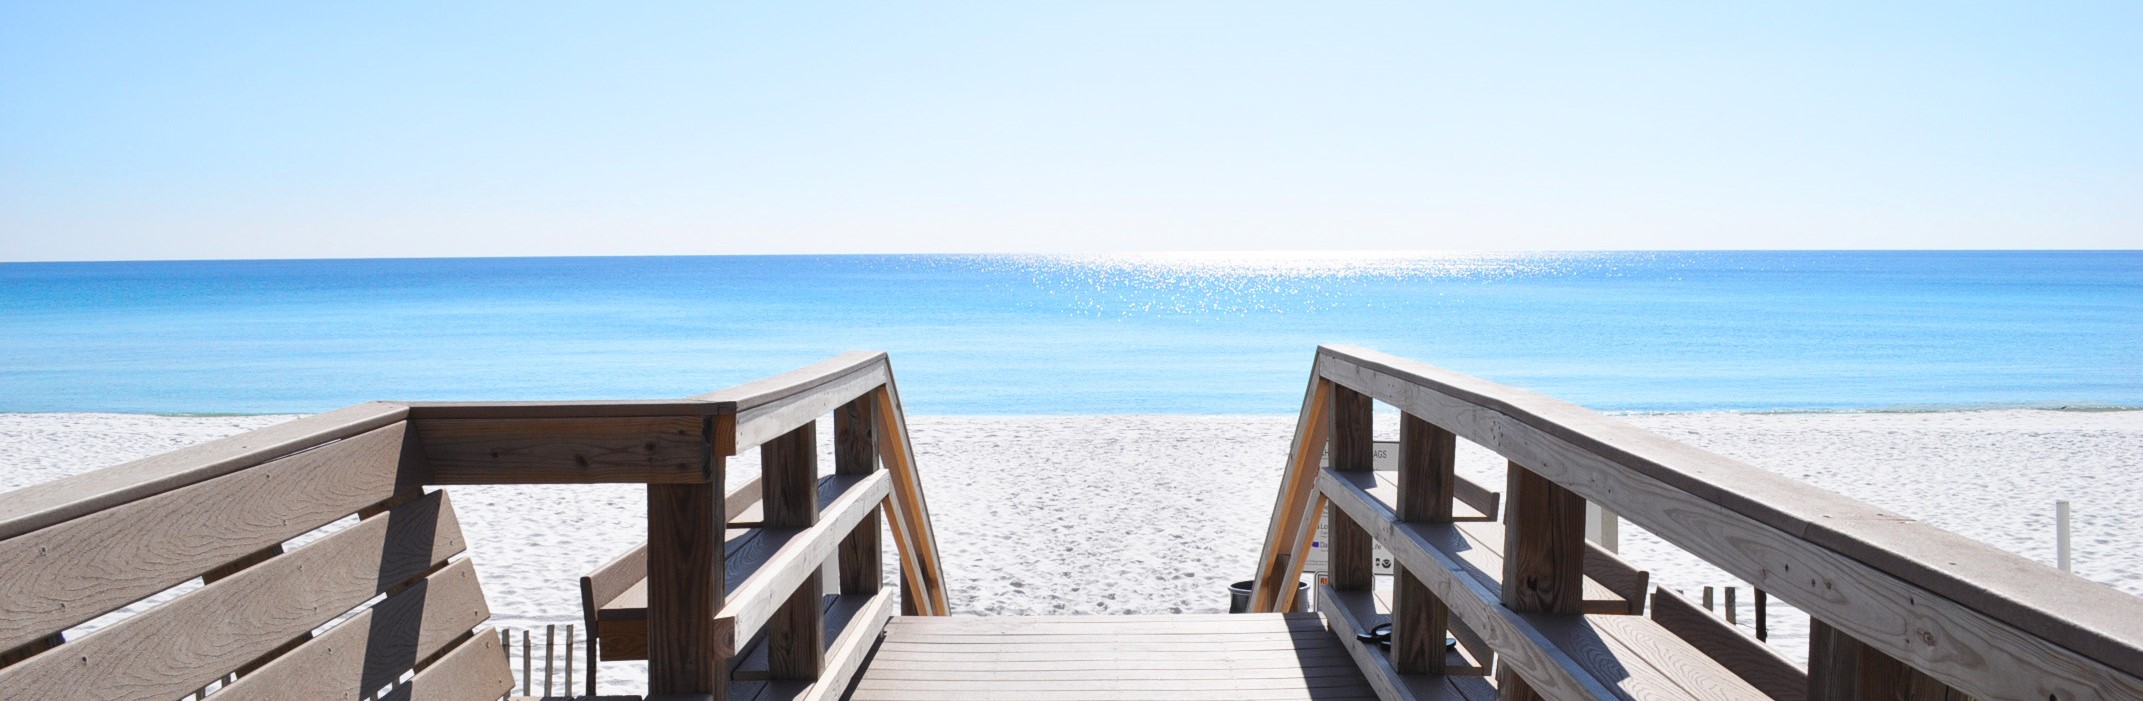 Florida Gulf Coast Vacation Rentals by Sunset Resort Rentals